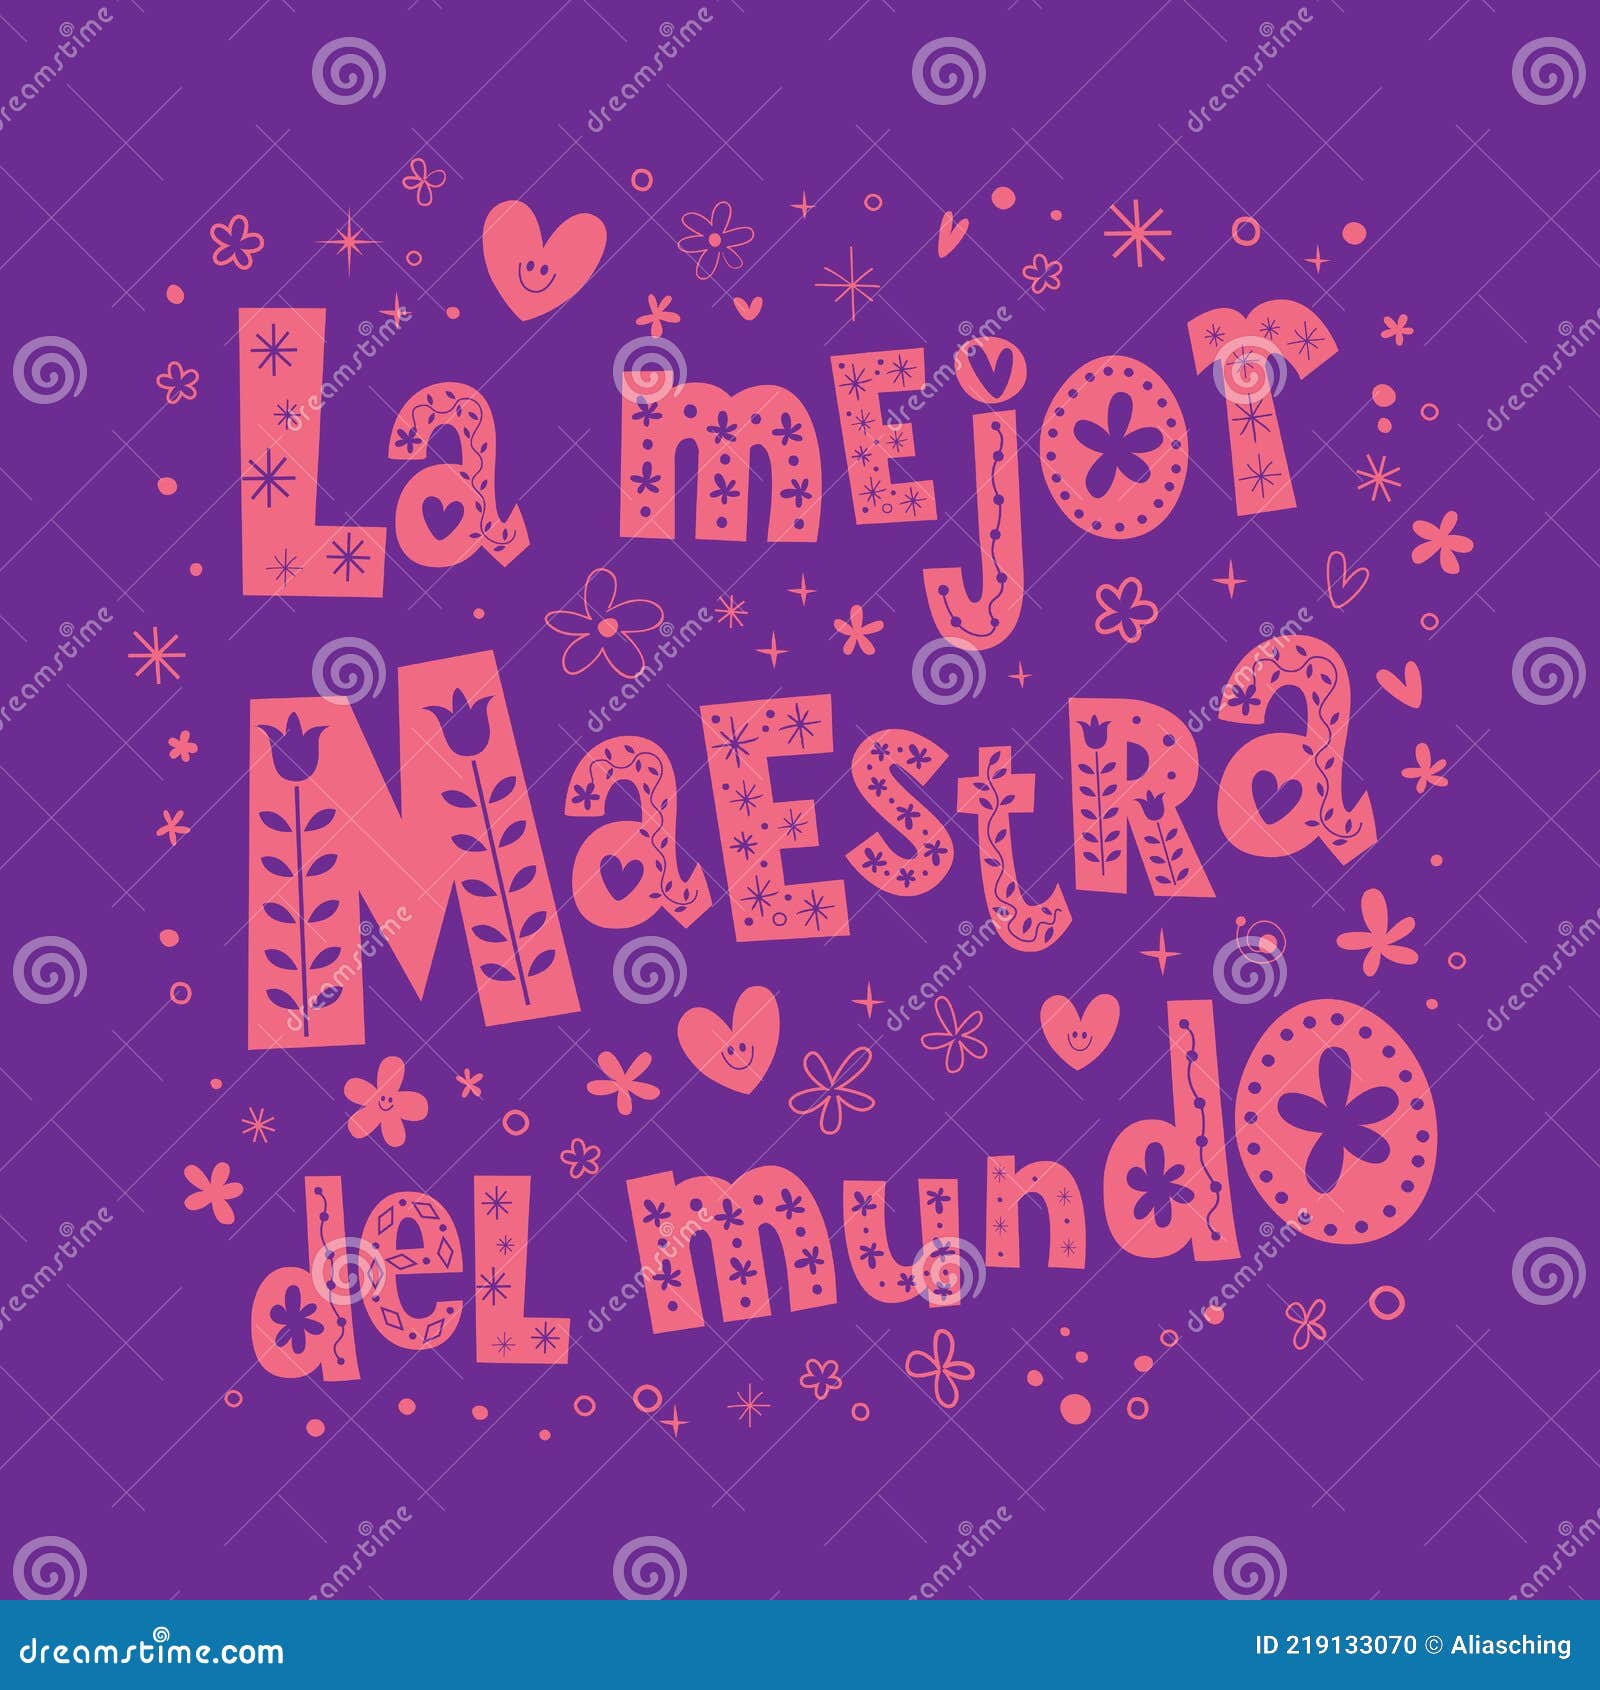 La Mejor Maestra Del Mundo - The Best Teacher In The World - In Spanish ...